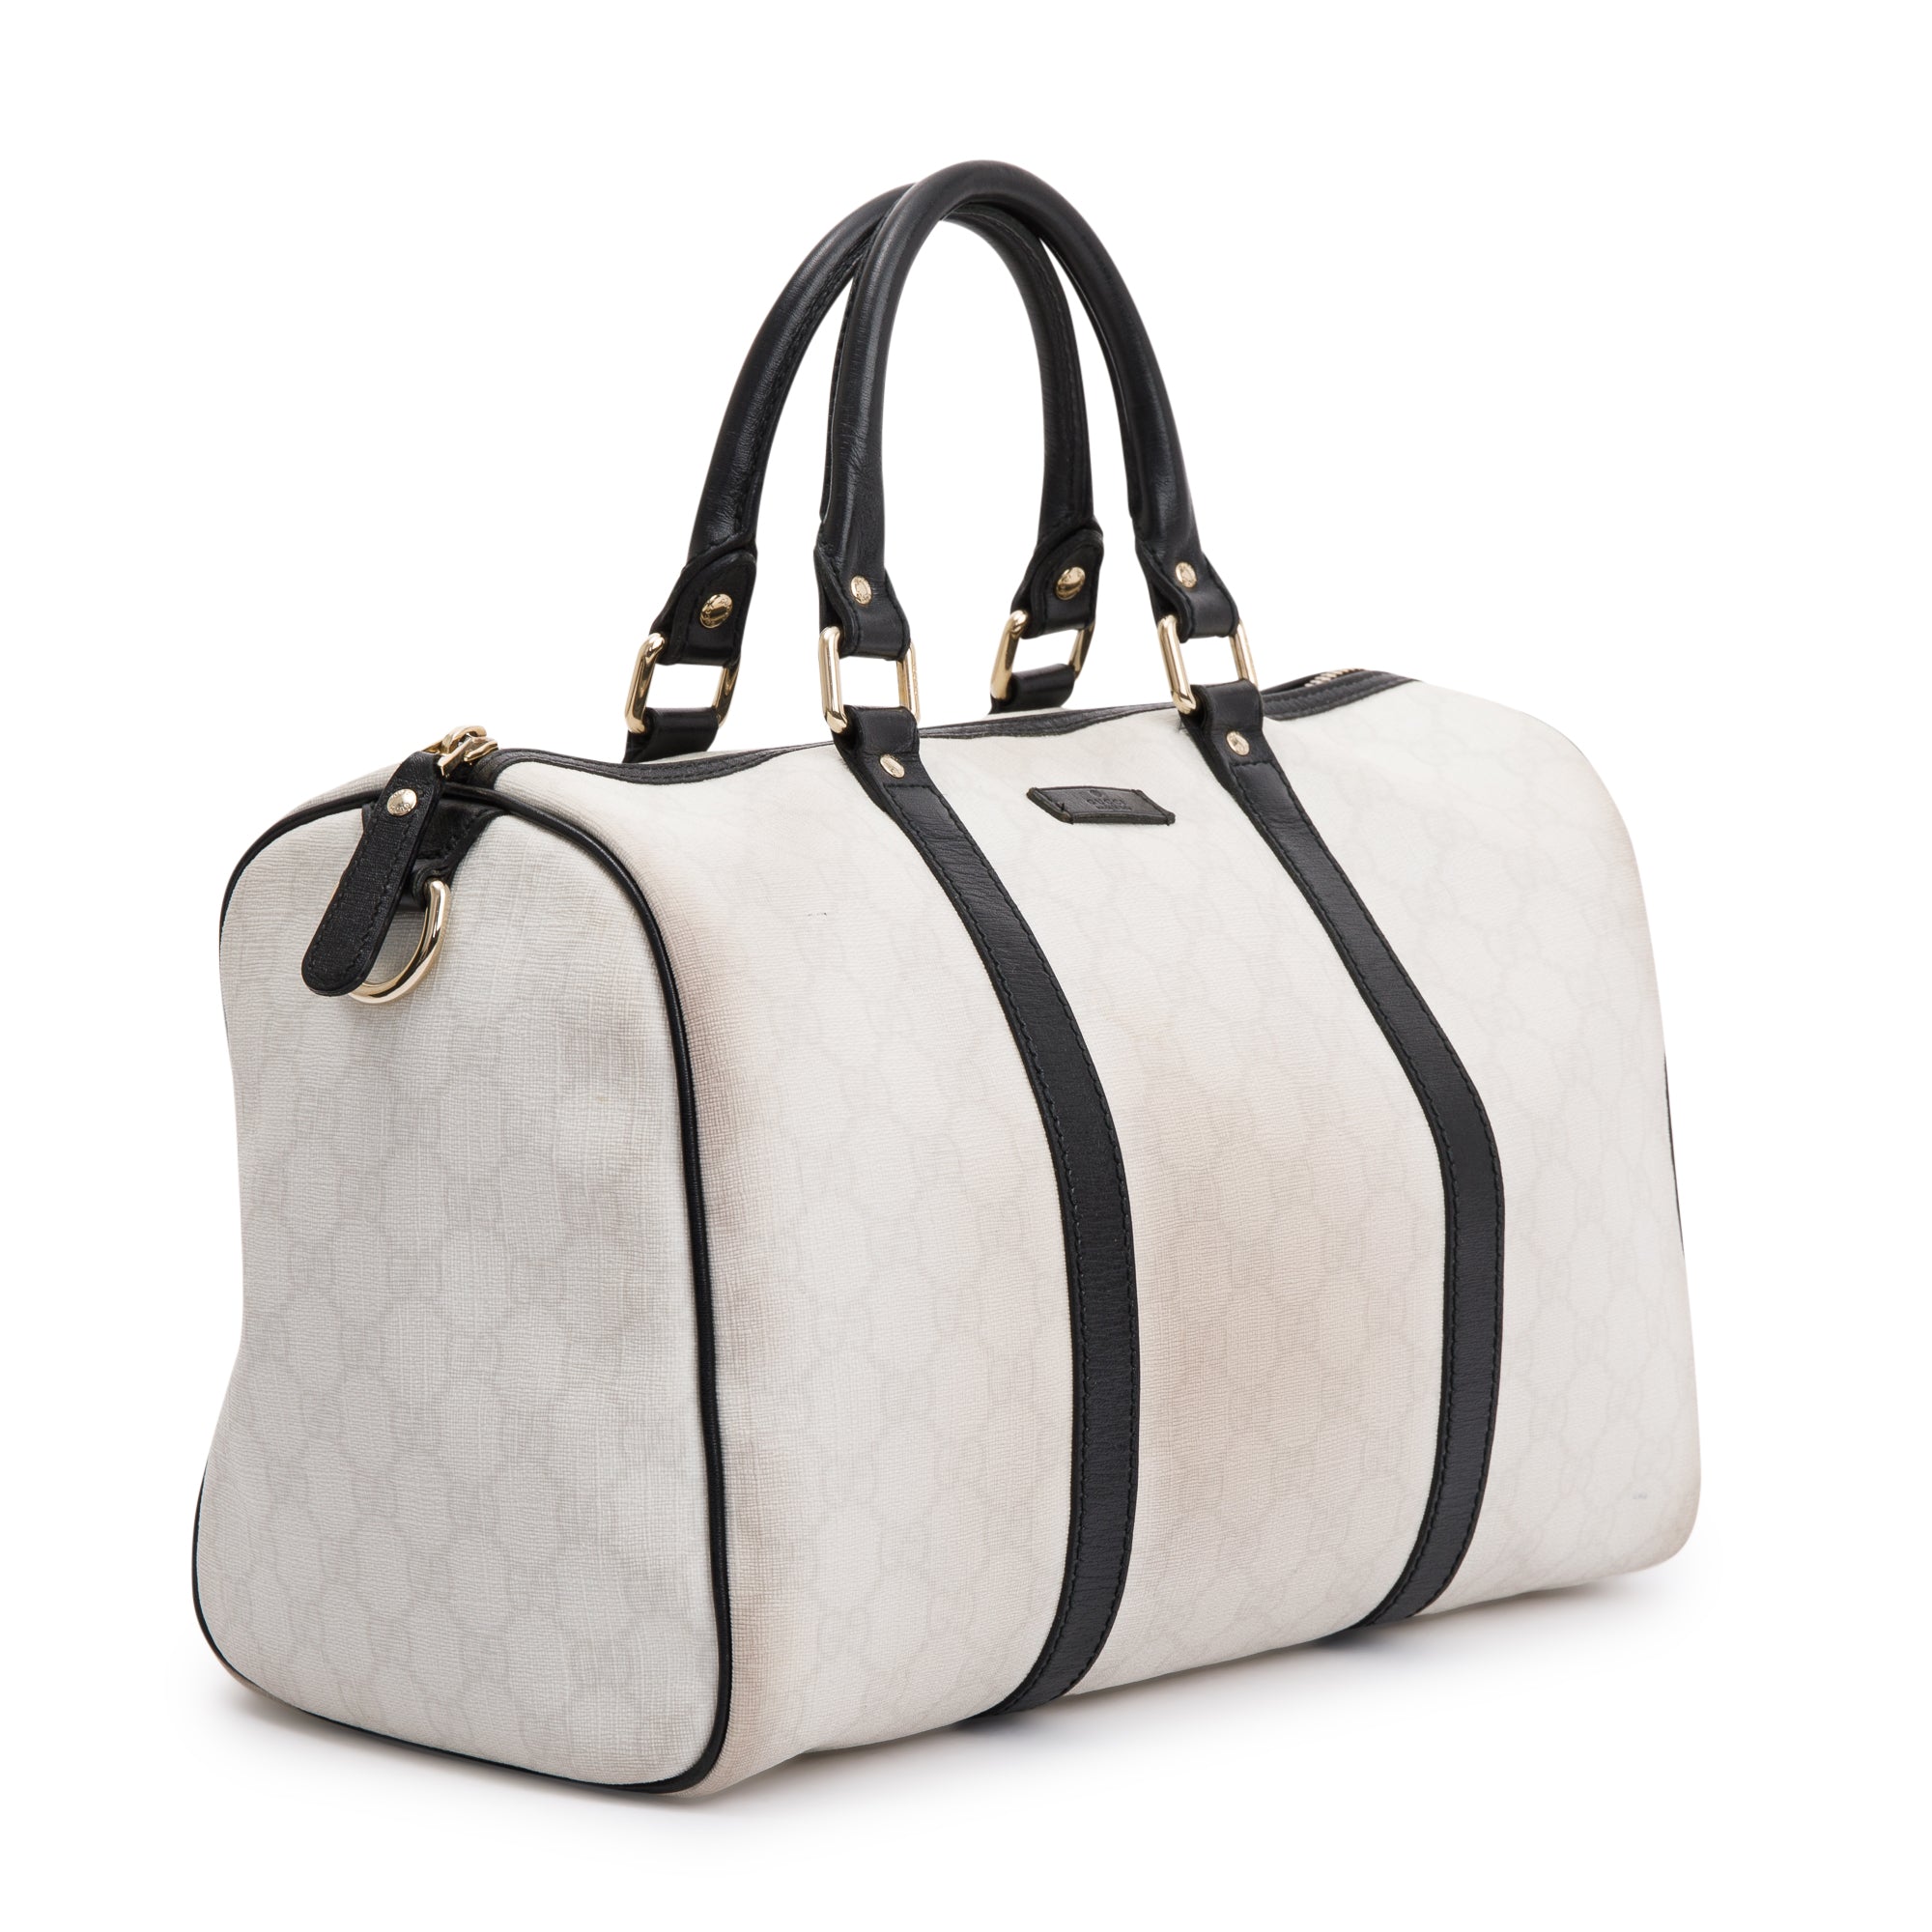 Gucci GG Supreme White Patent Leather Medium Joy Boston Bag